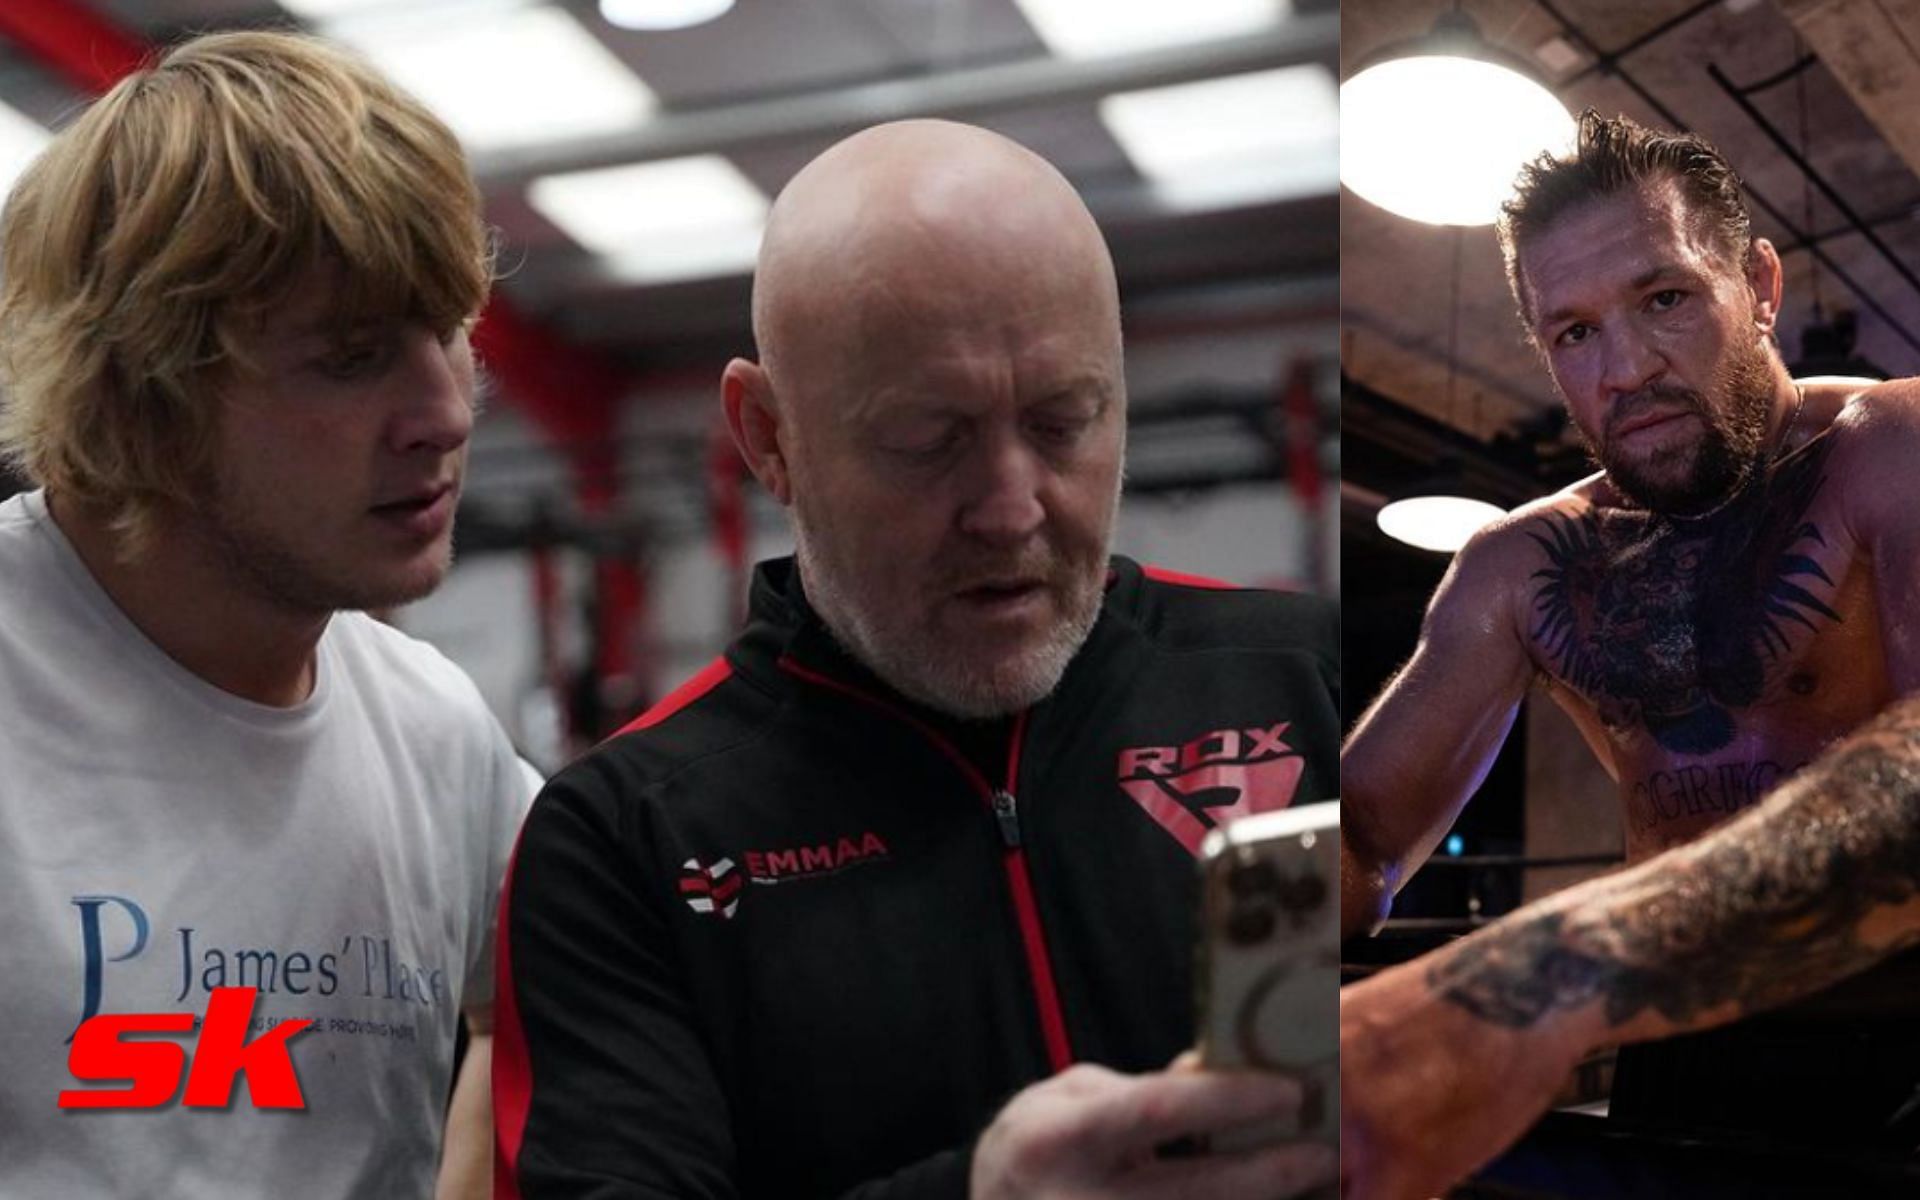 Paddy Pimblett in training (left - via @theufcbaddy), Conor McGregor (right - @thenotoriousmma)